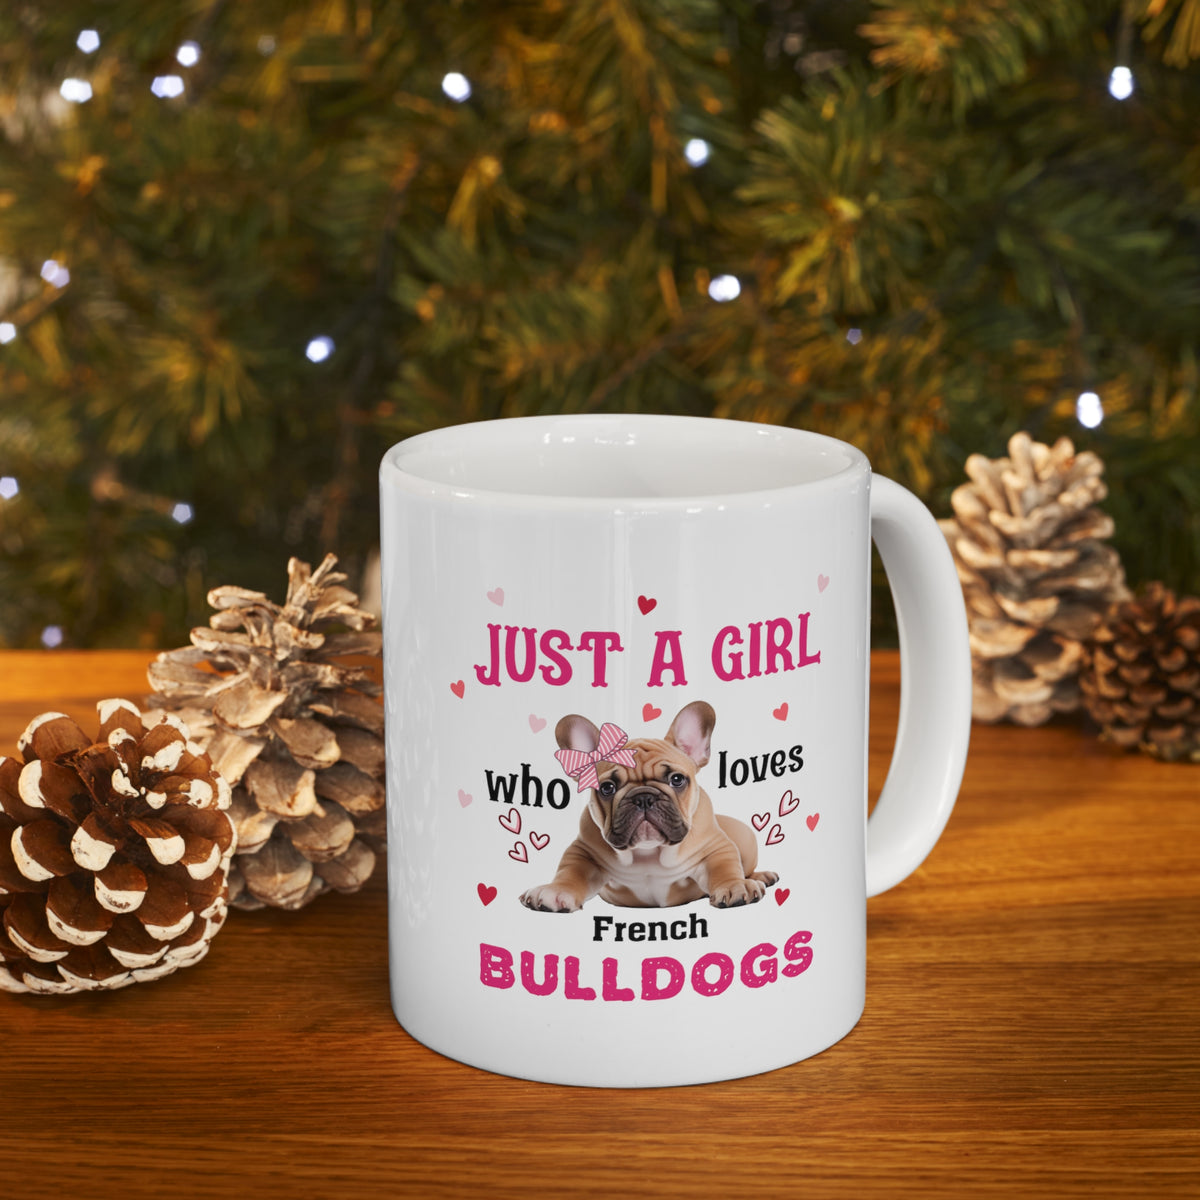 French Bulldog Mugs / French Bulldog Dog Mugs